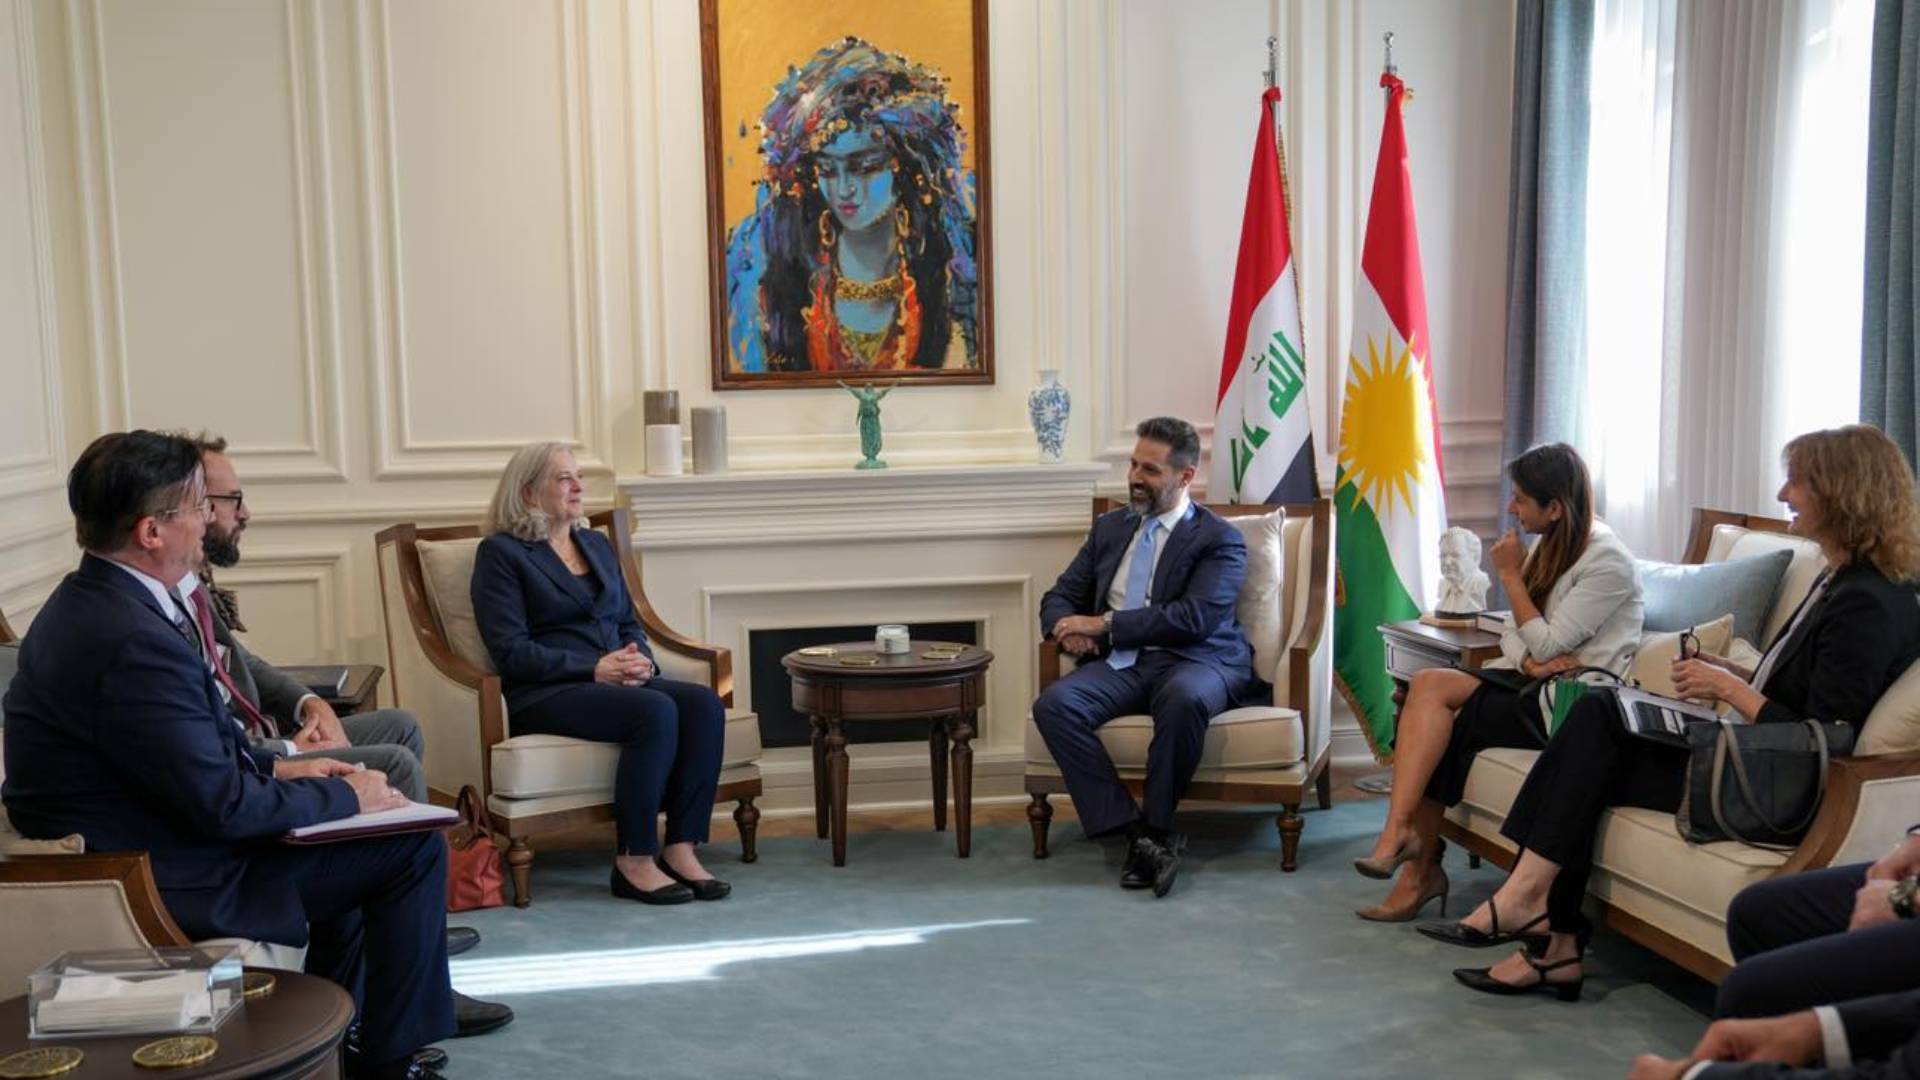  DPM Qubad Talabani and the U.S. Ambassador's meeting.